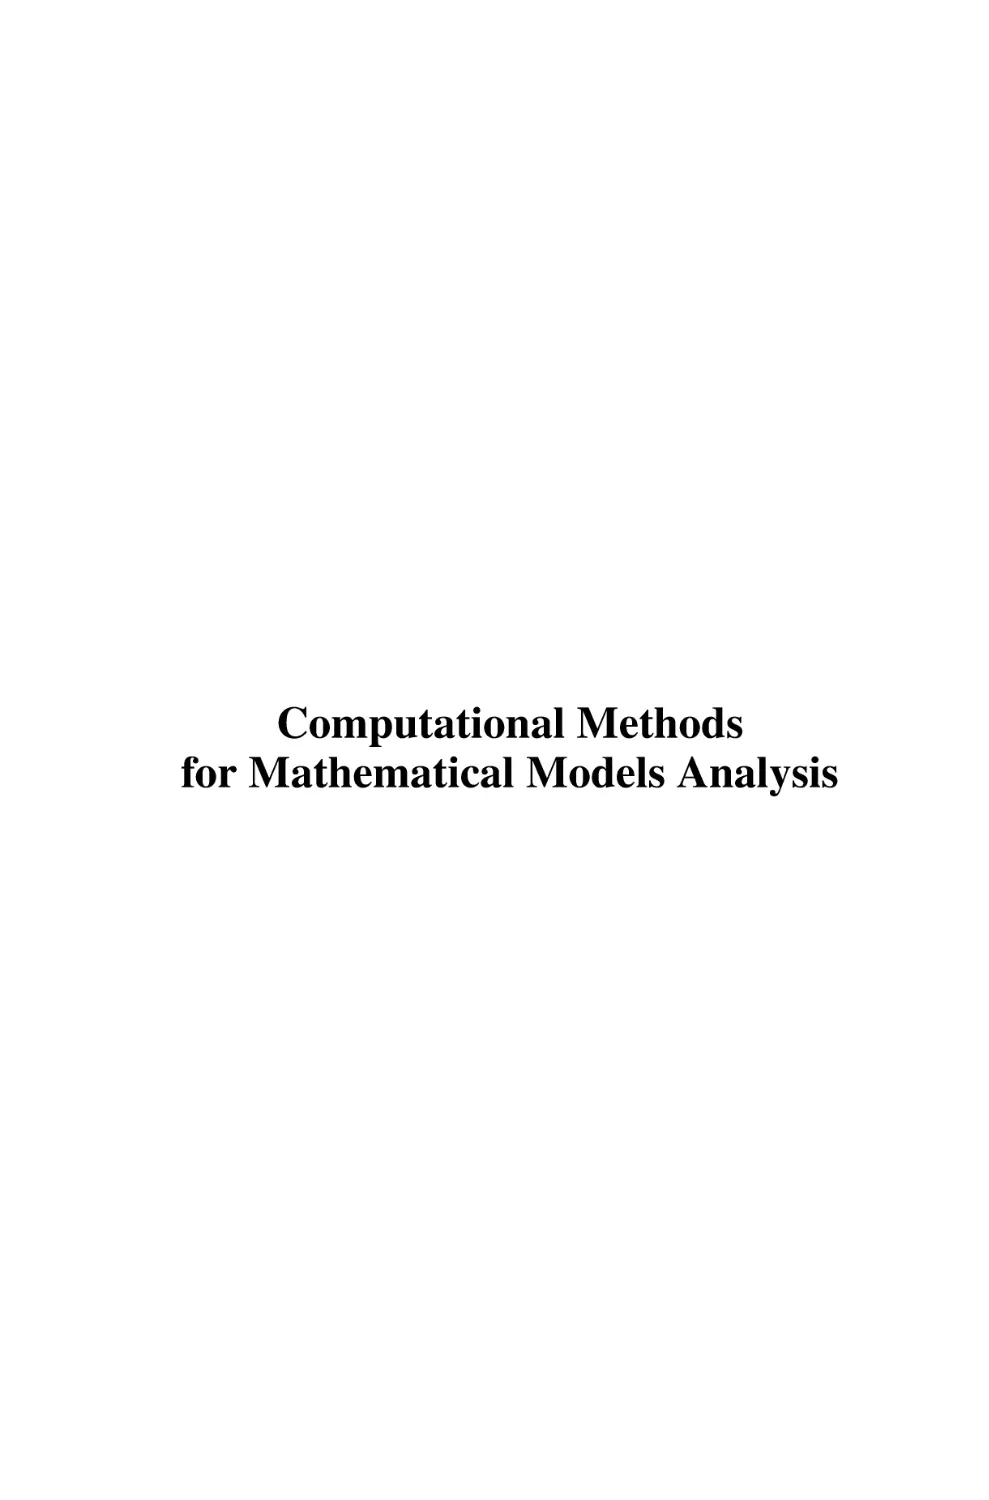 Computational Methods for Mathematical Models Analysis